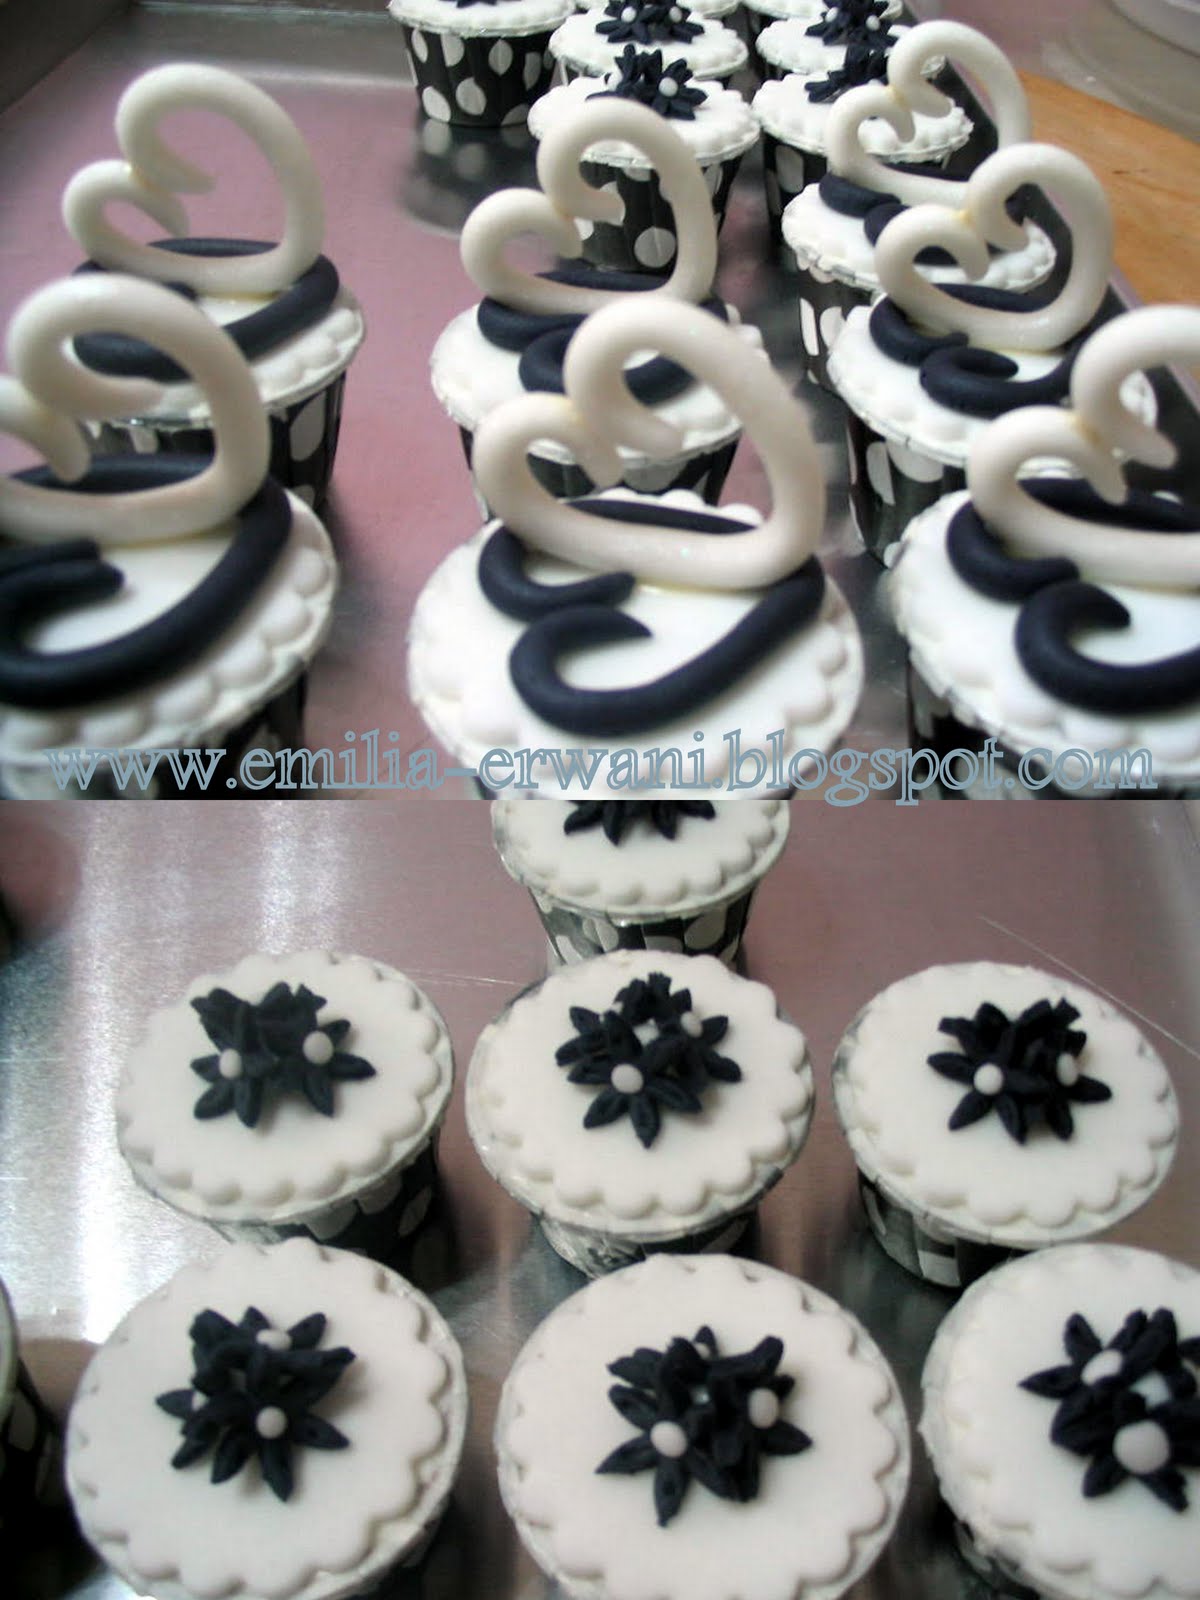 Black & white wedding cake/